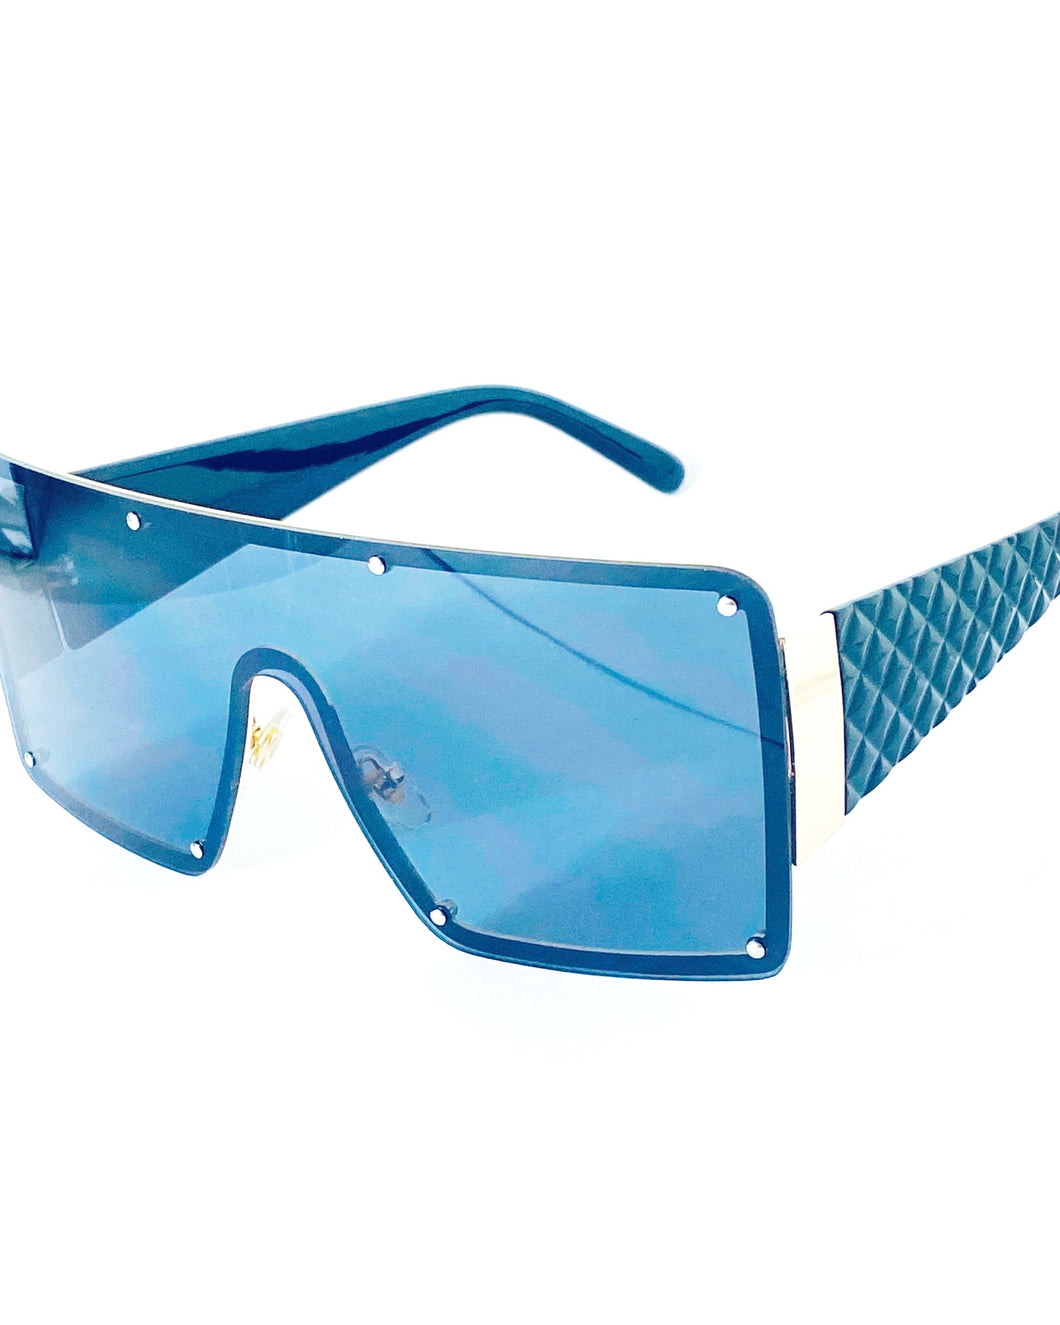 “Diamond Cut Sunglasses”